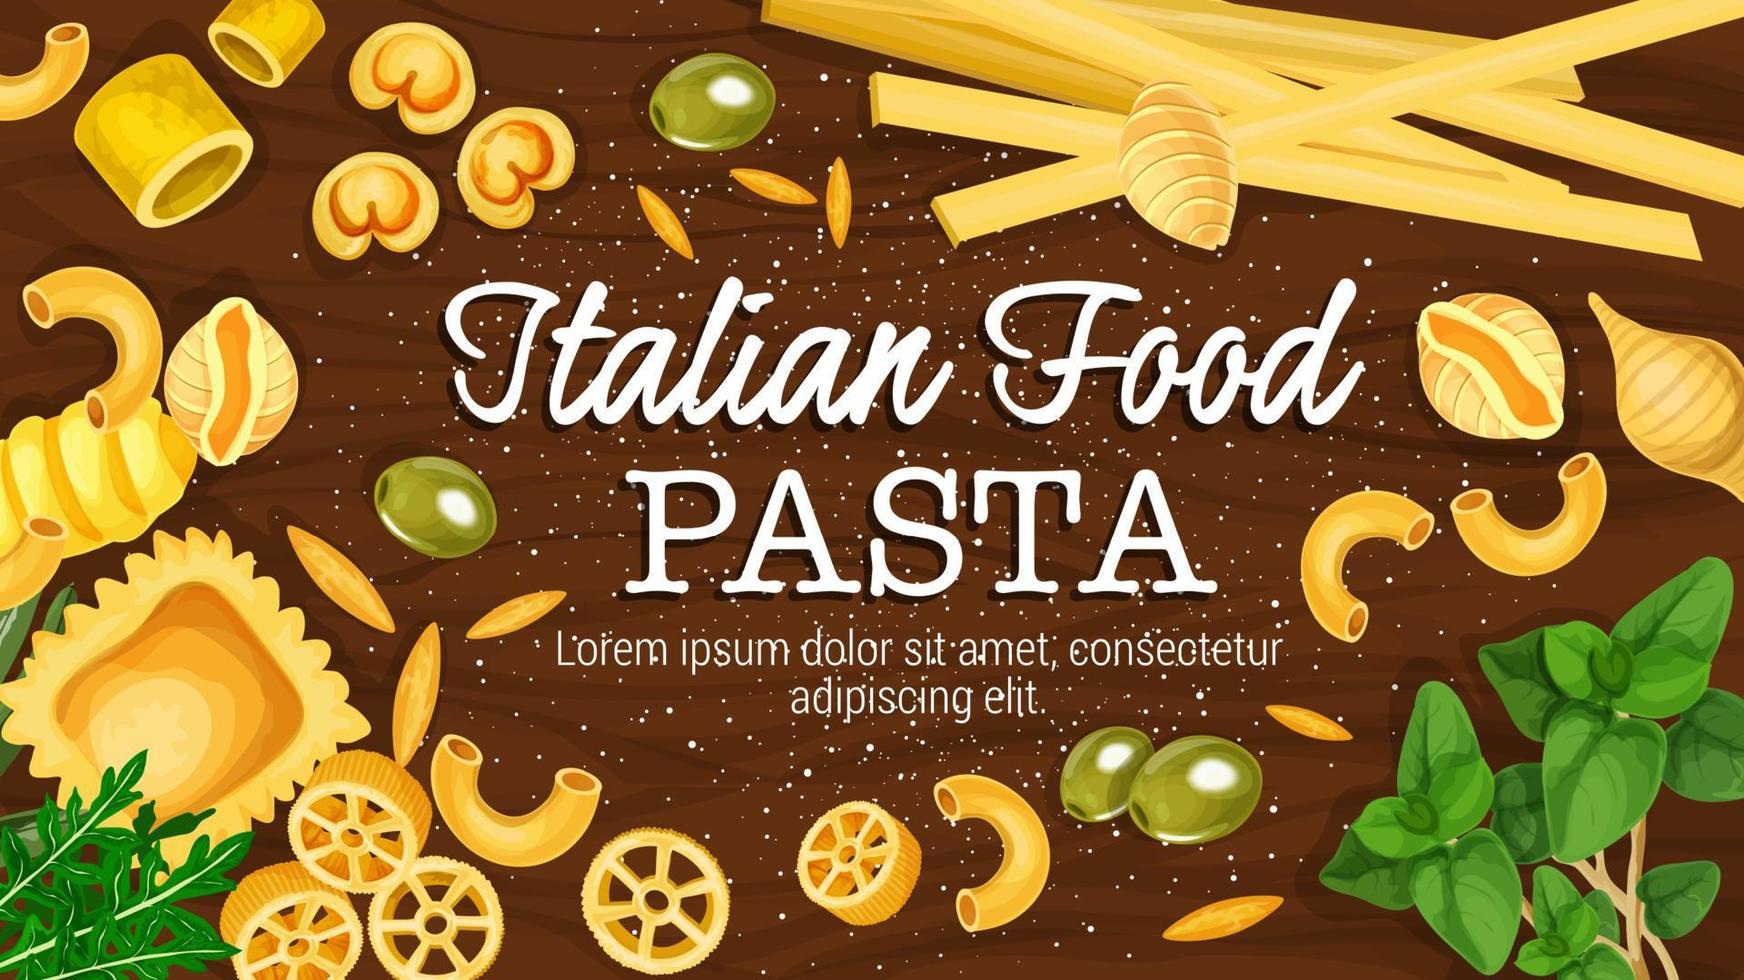 Italian pasta on board vector poster